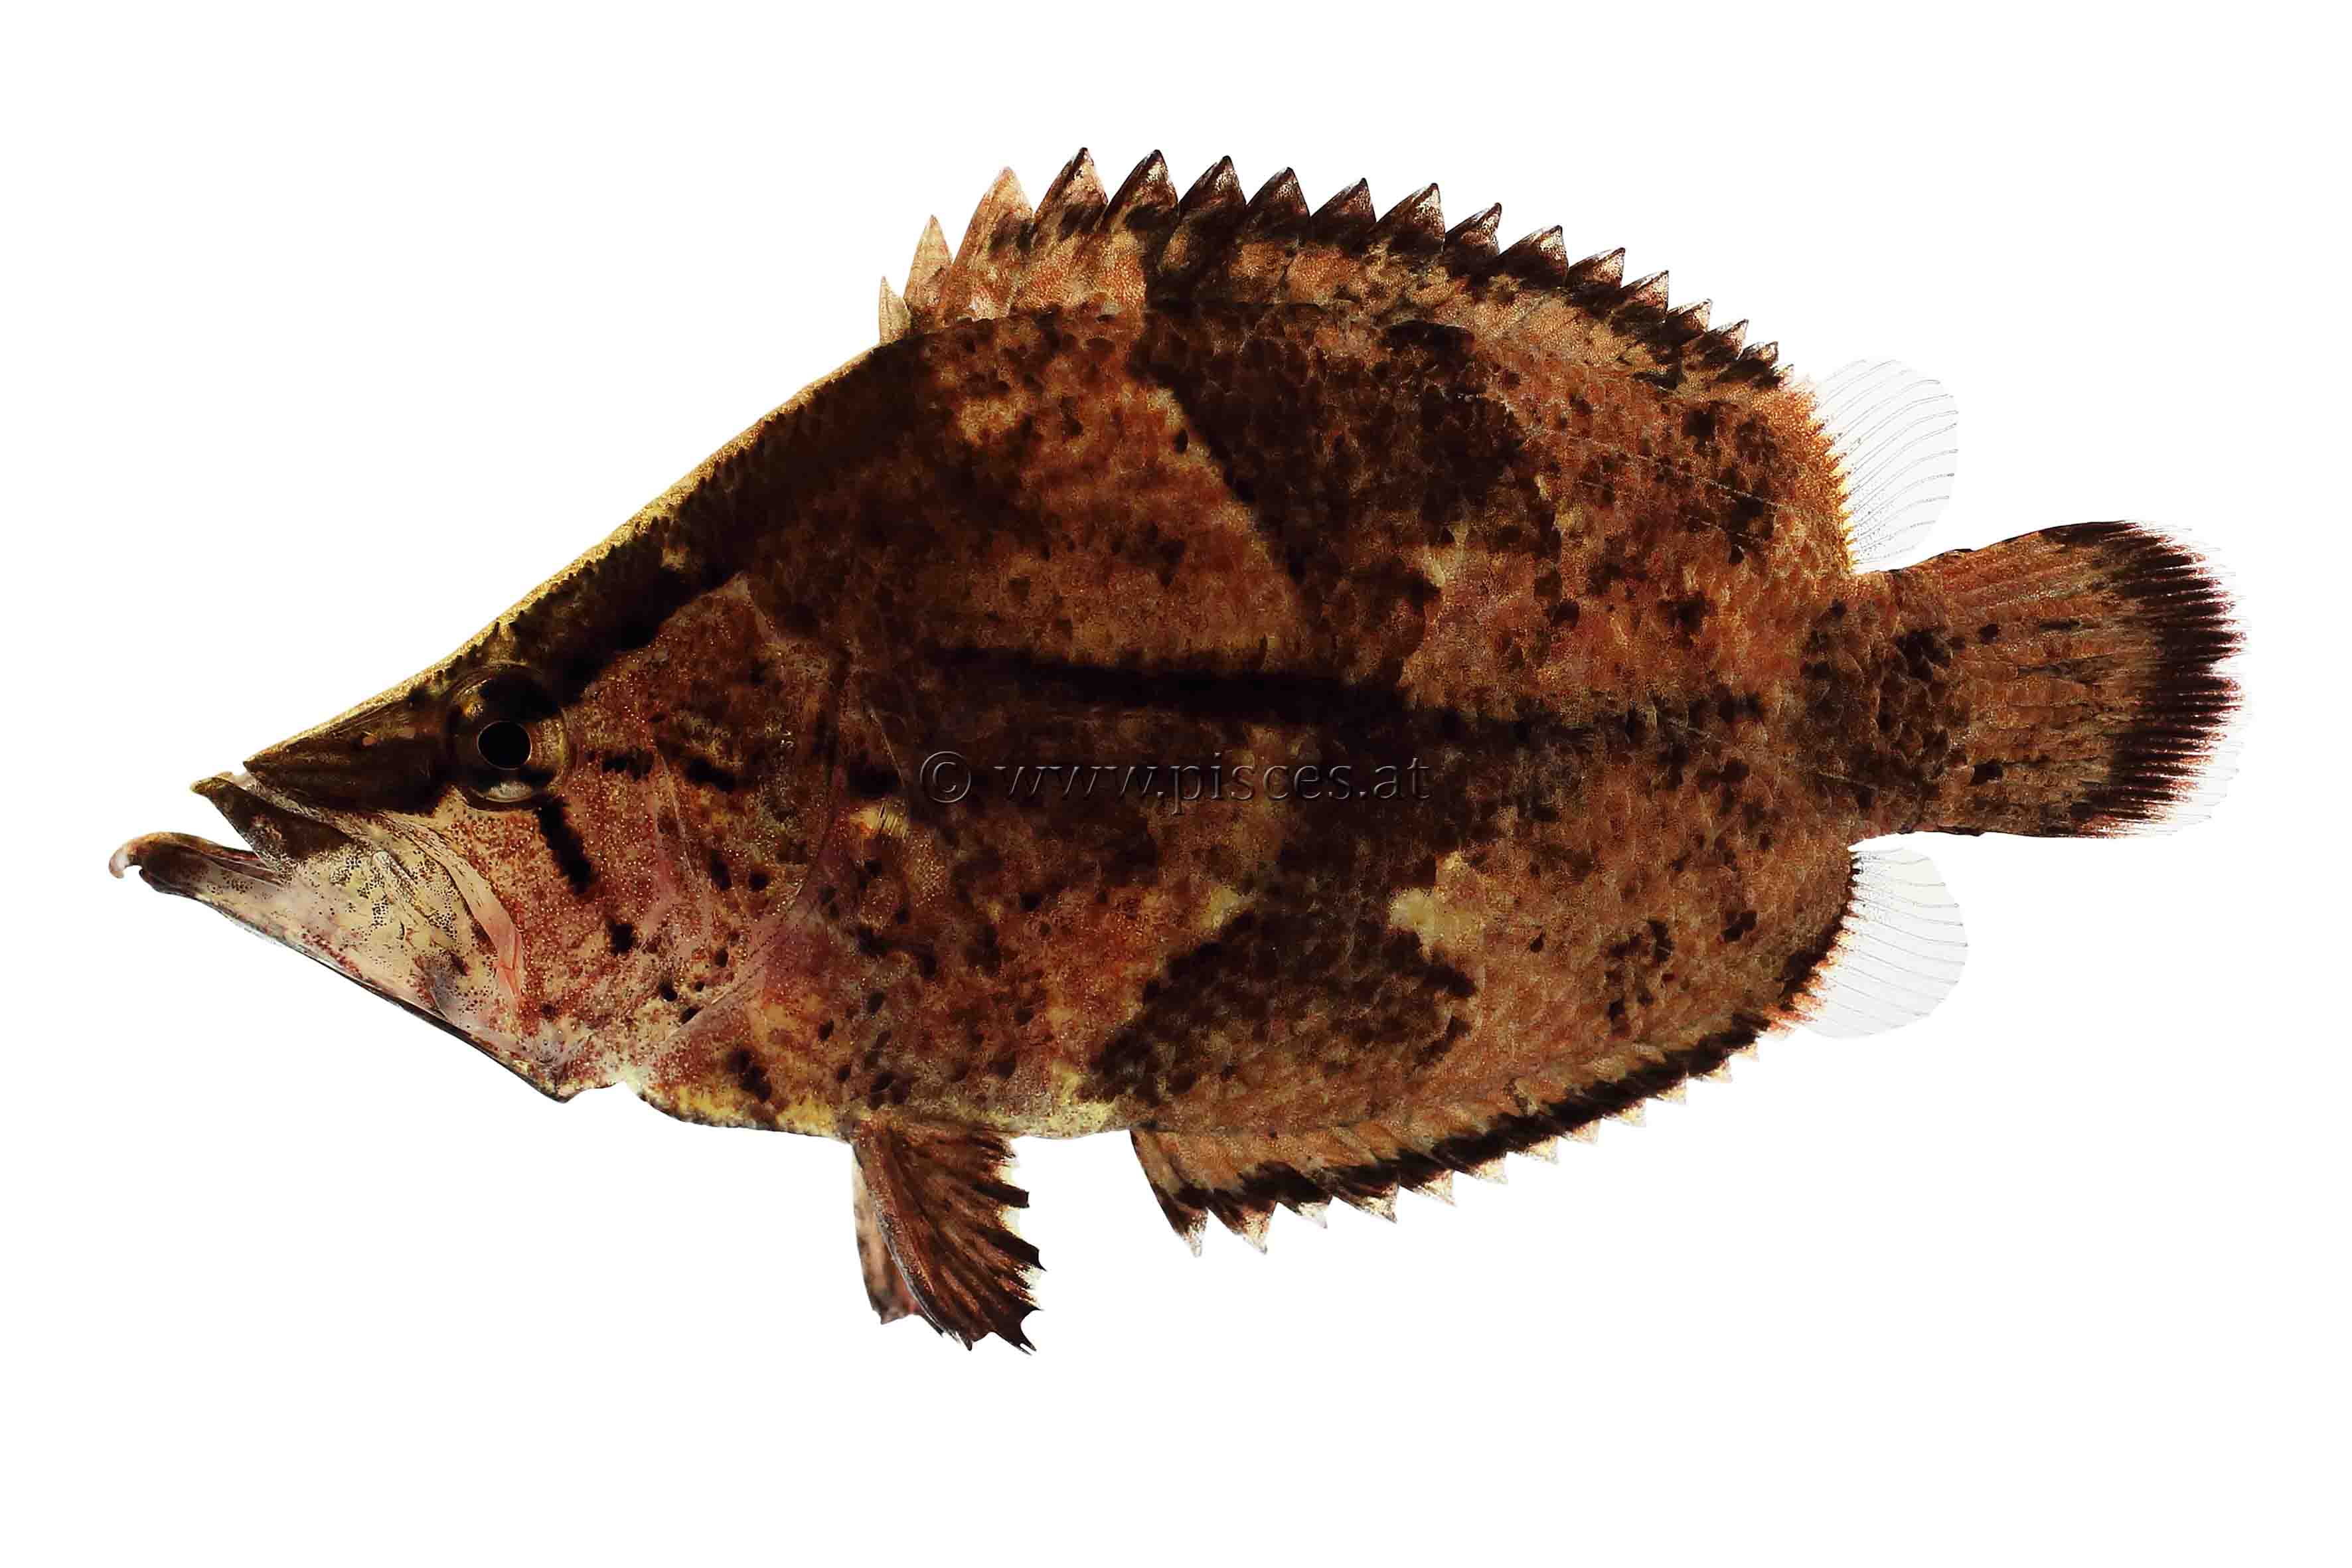 <em>Monocirrhus polyacanthus</em> (Blattfisch, Amazon leaffish)